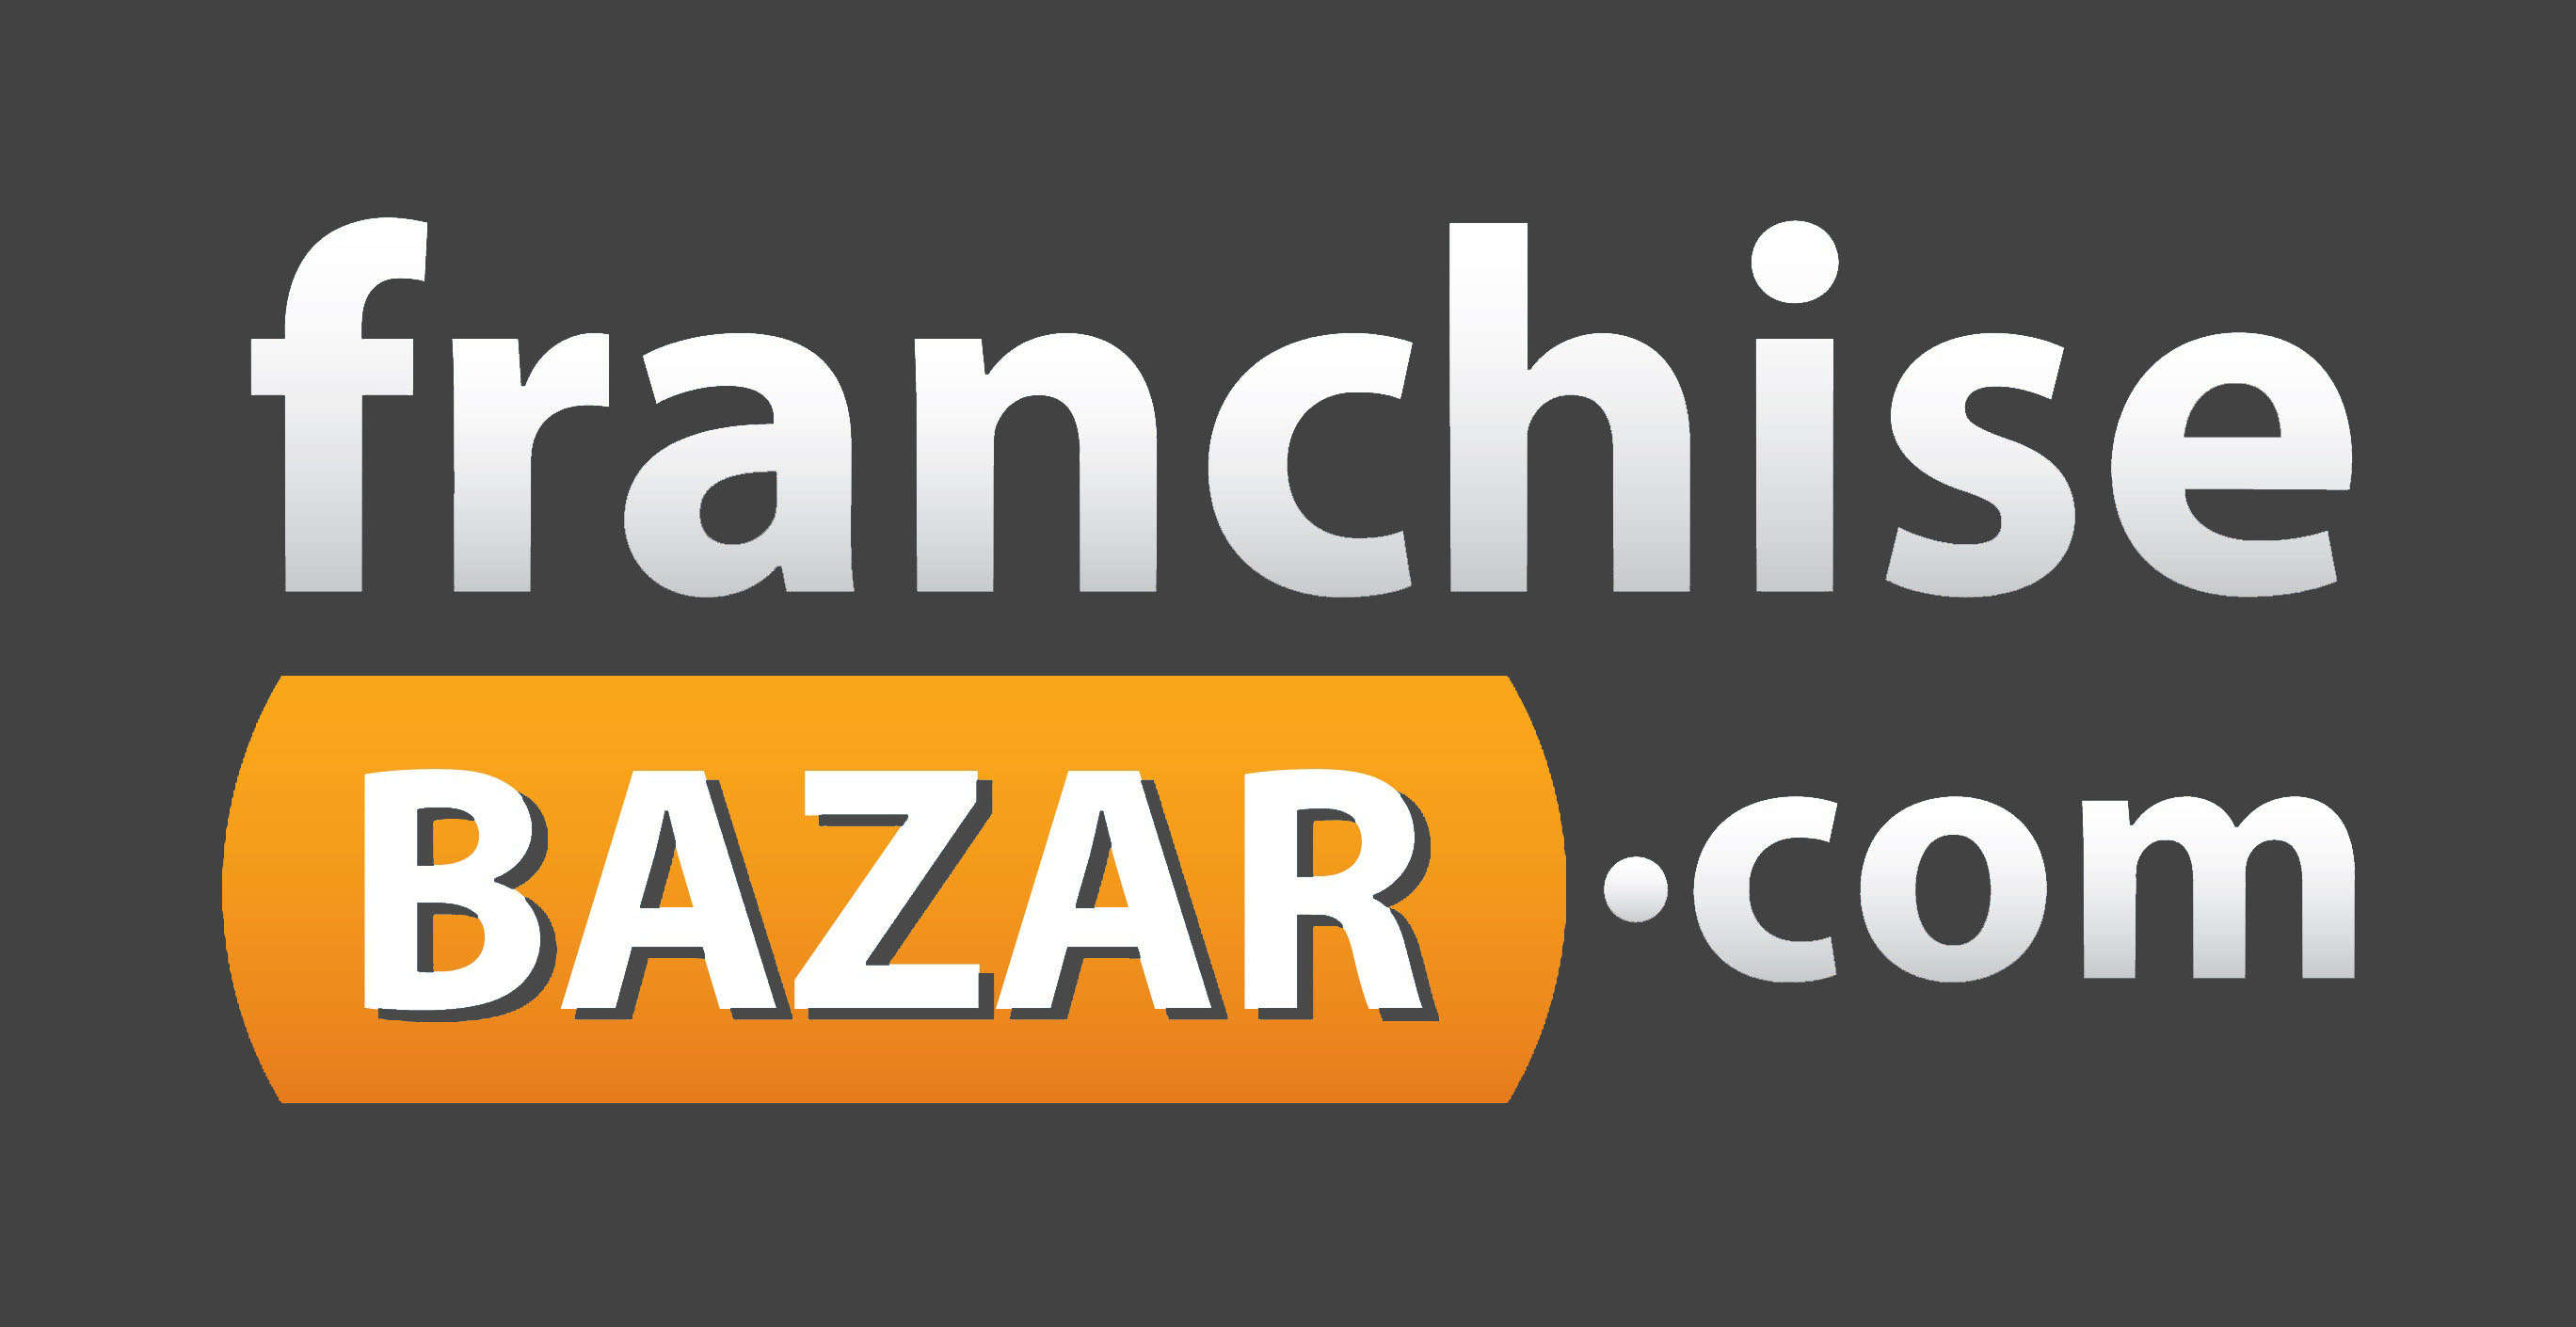 Franchise Bazar - Crunchbase Company Profile & Funding